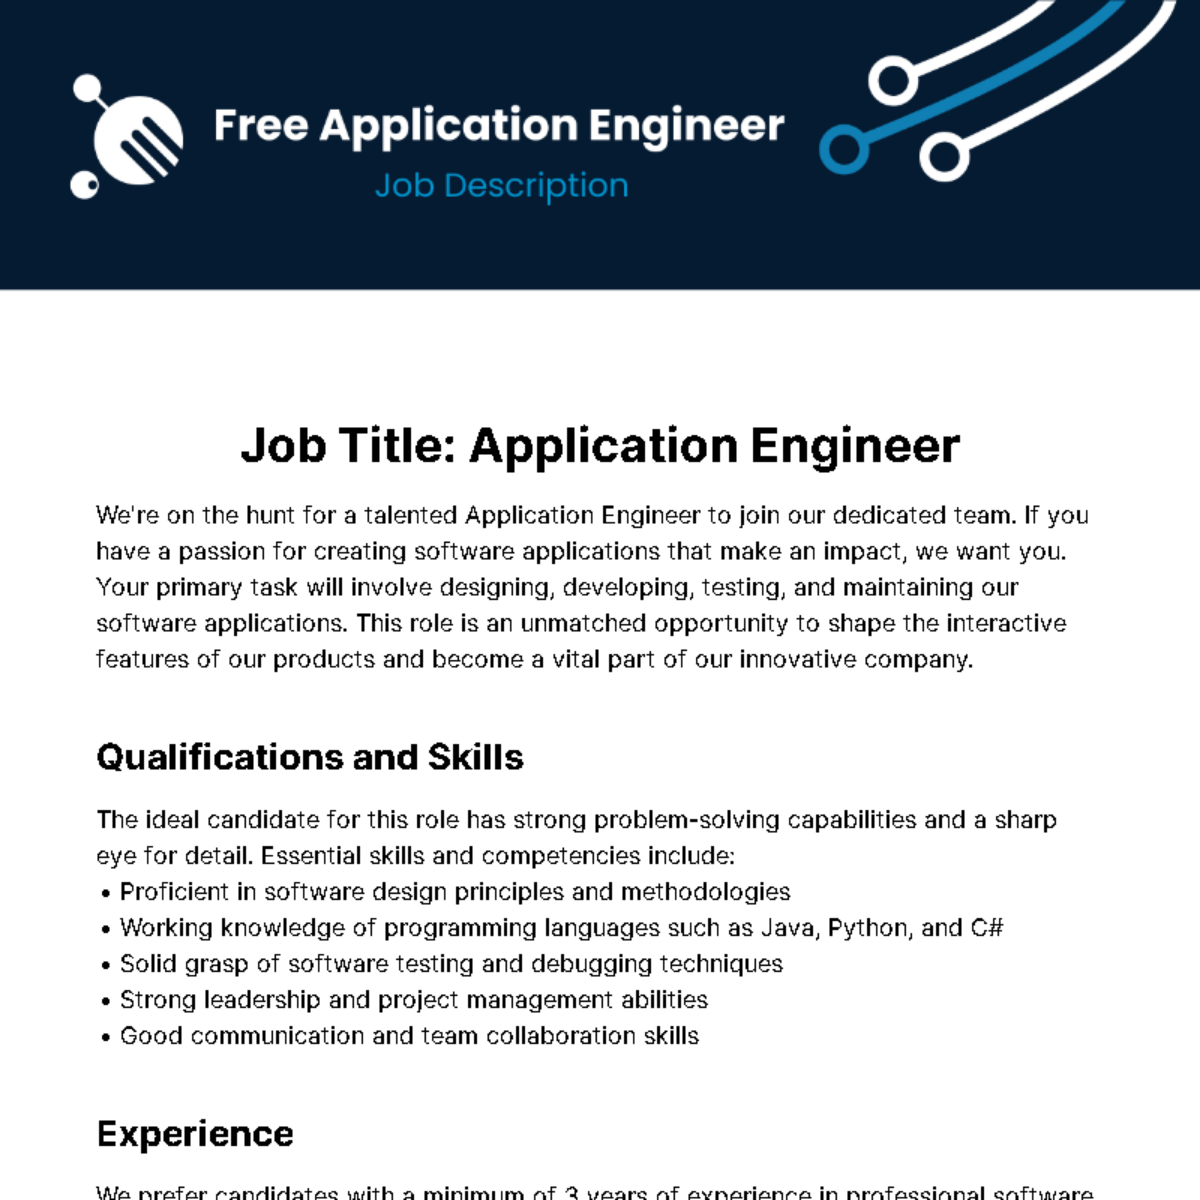 Free Application Engineer Job Description Template